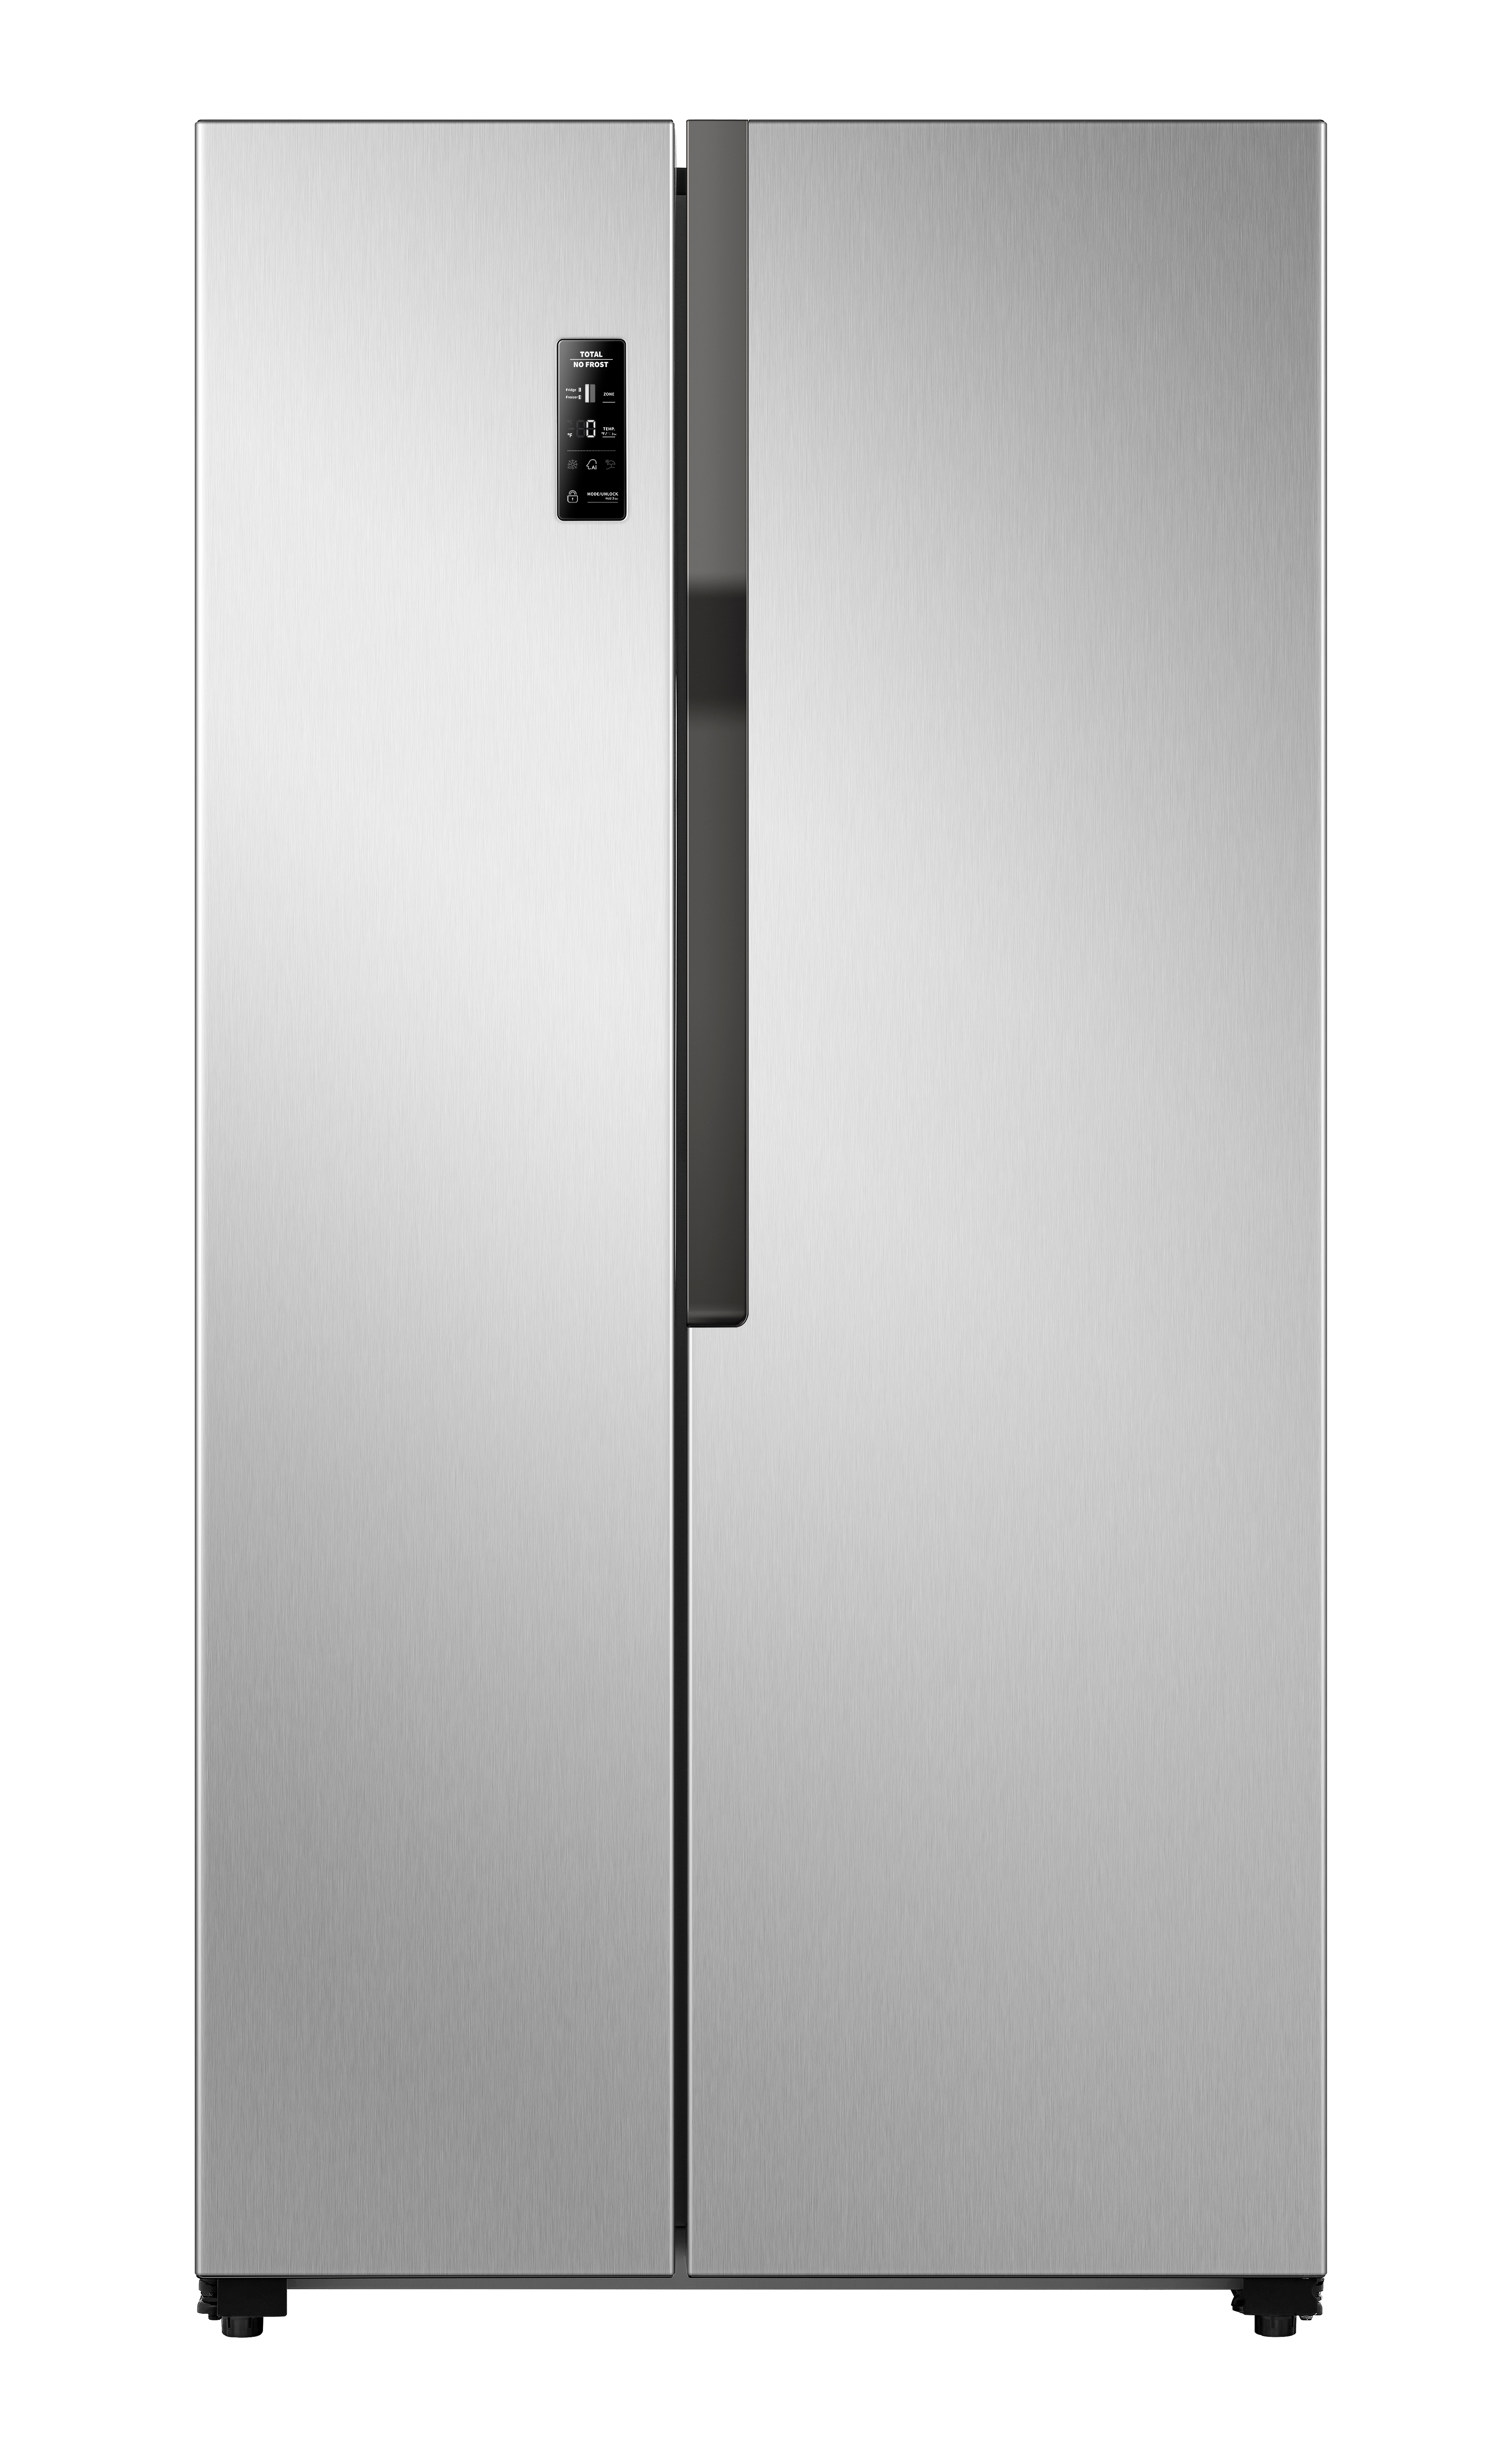 Mora 19 CF Capacity Side by Side Refrigerator Metallic Steel Silver Model MRS184N6AVD - image 1 of 14